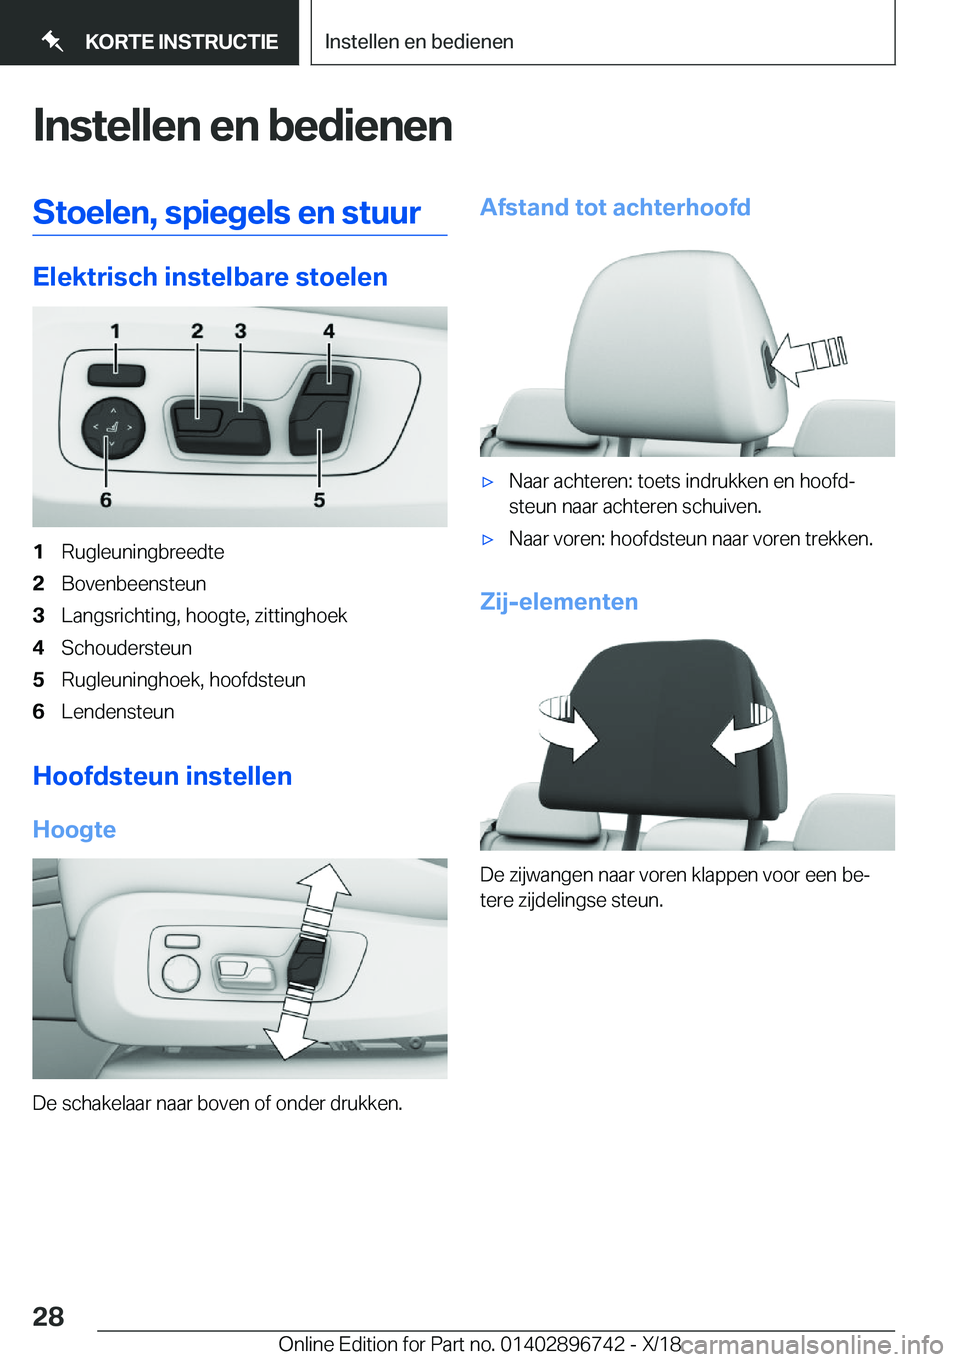 BMW X5 2019  Instructieboekjes (in Dutch) �I�n�s�t�e�l�l�e�n��e�n��b�e�d�i�e�n�e�n�S�t�o�e�l�e�n�,��s�p�i�e�g�e�l�s��e�n��s�t�u�u�r
�E�l�e�k�t�r�i�s�c�h��i�n�s�t�e�l�b�a�r�e��s�t�o�e�l�e�n
�1�R�u�g�l�e�u�n�i�n�g�b�r�e�e�d�t�e�2�B�o�v�e